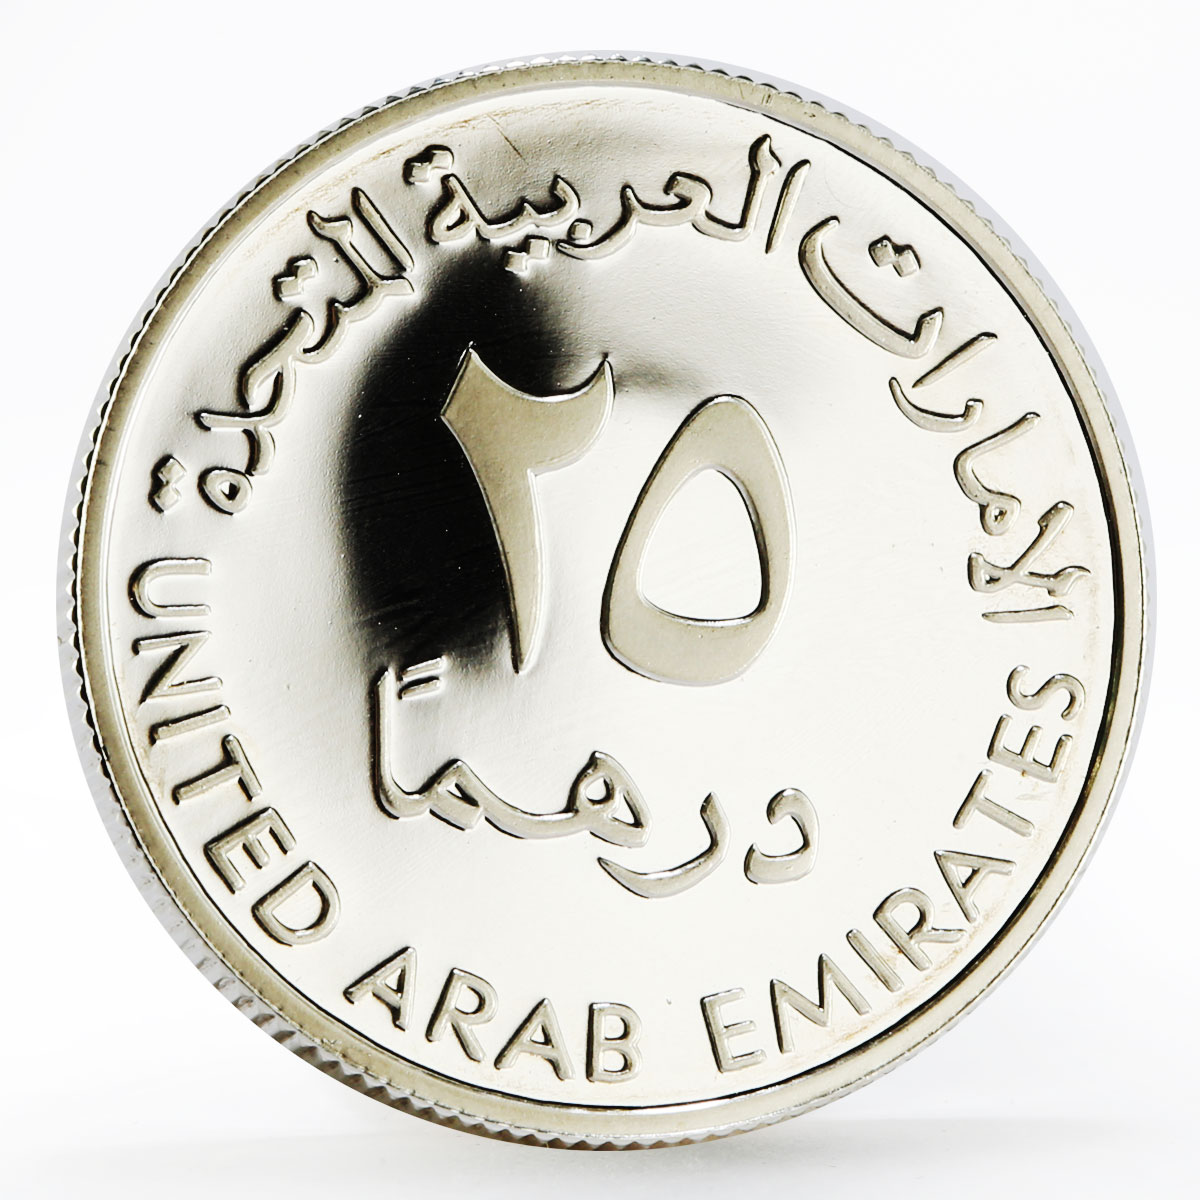 United Arab Emirates 25 dirhams National Bank of Dubai proof silver coin 1998